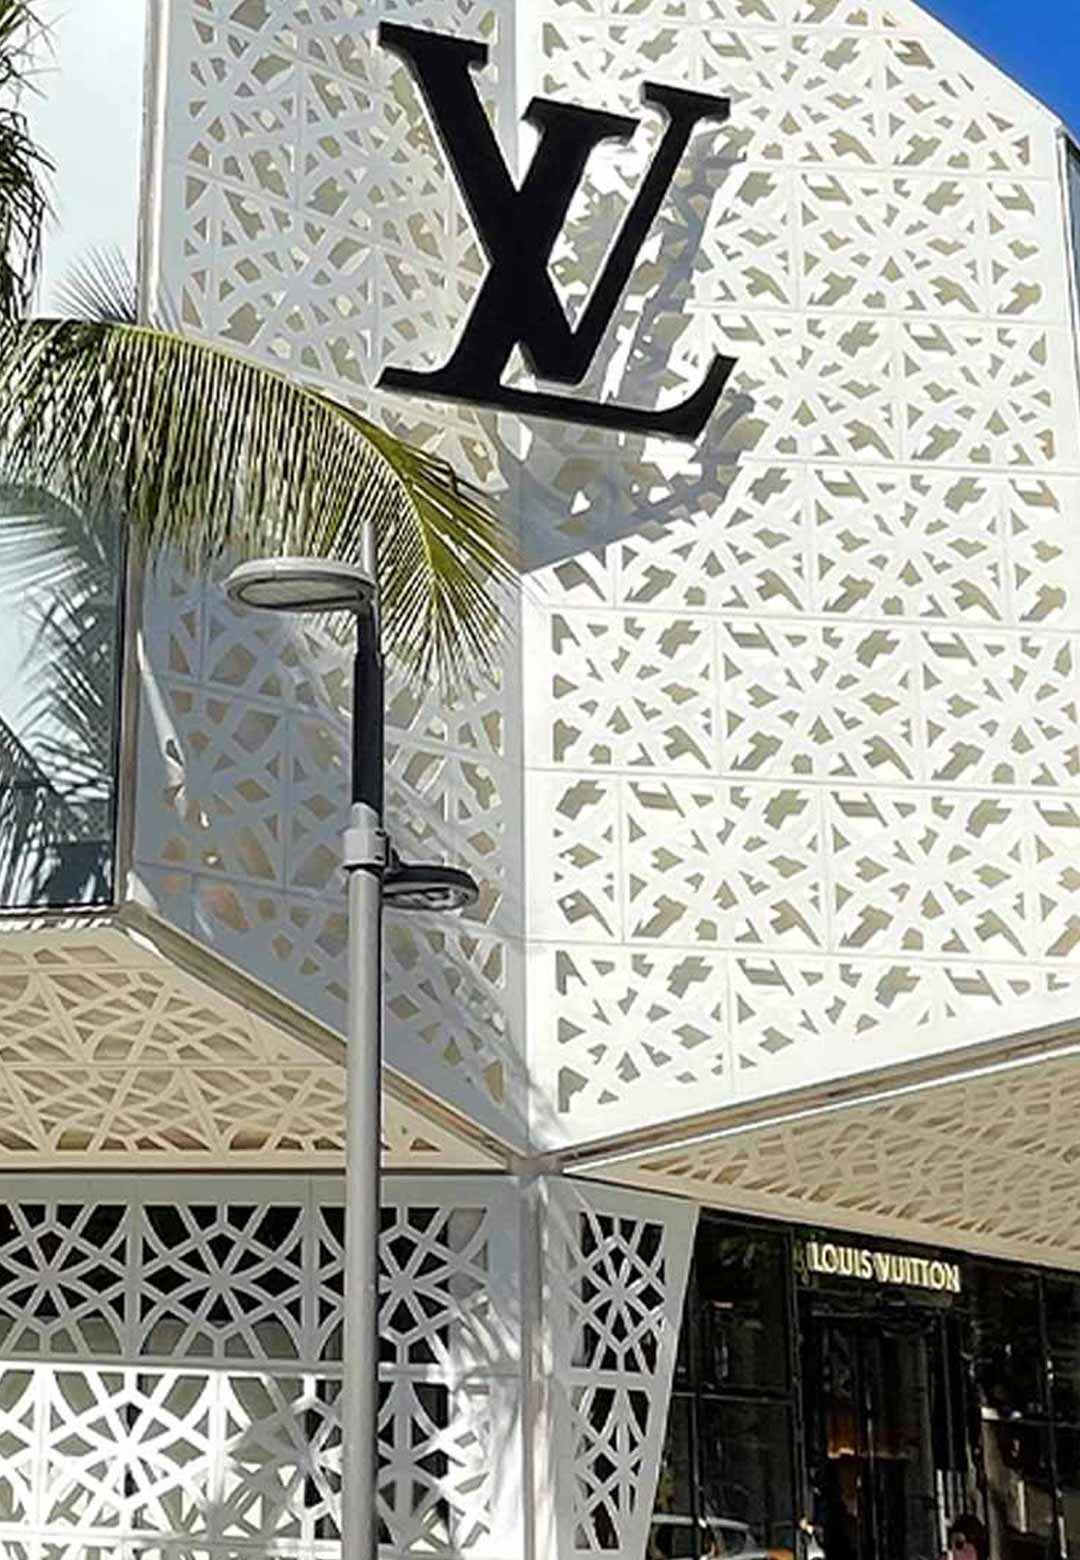 Marcel Wanders studio designs the Diamond Facade for Louis Vuitton’s new boutique